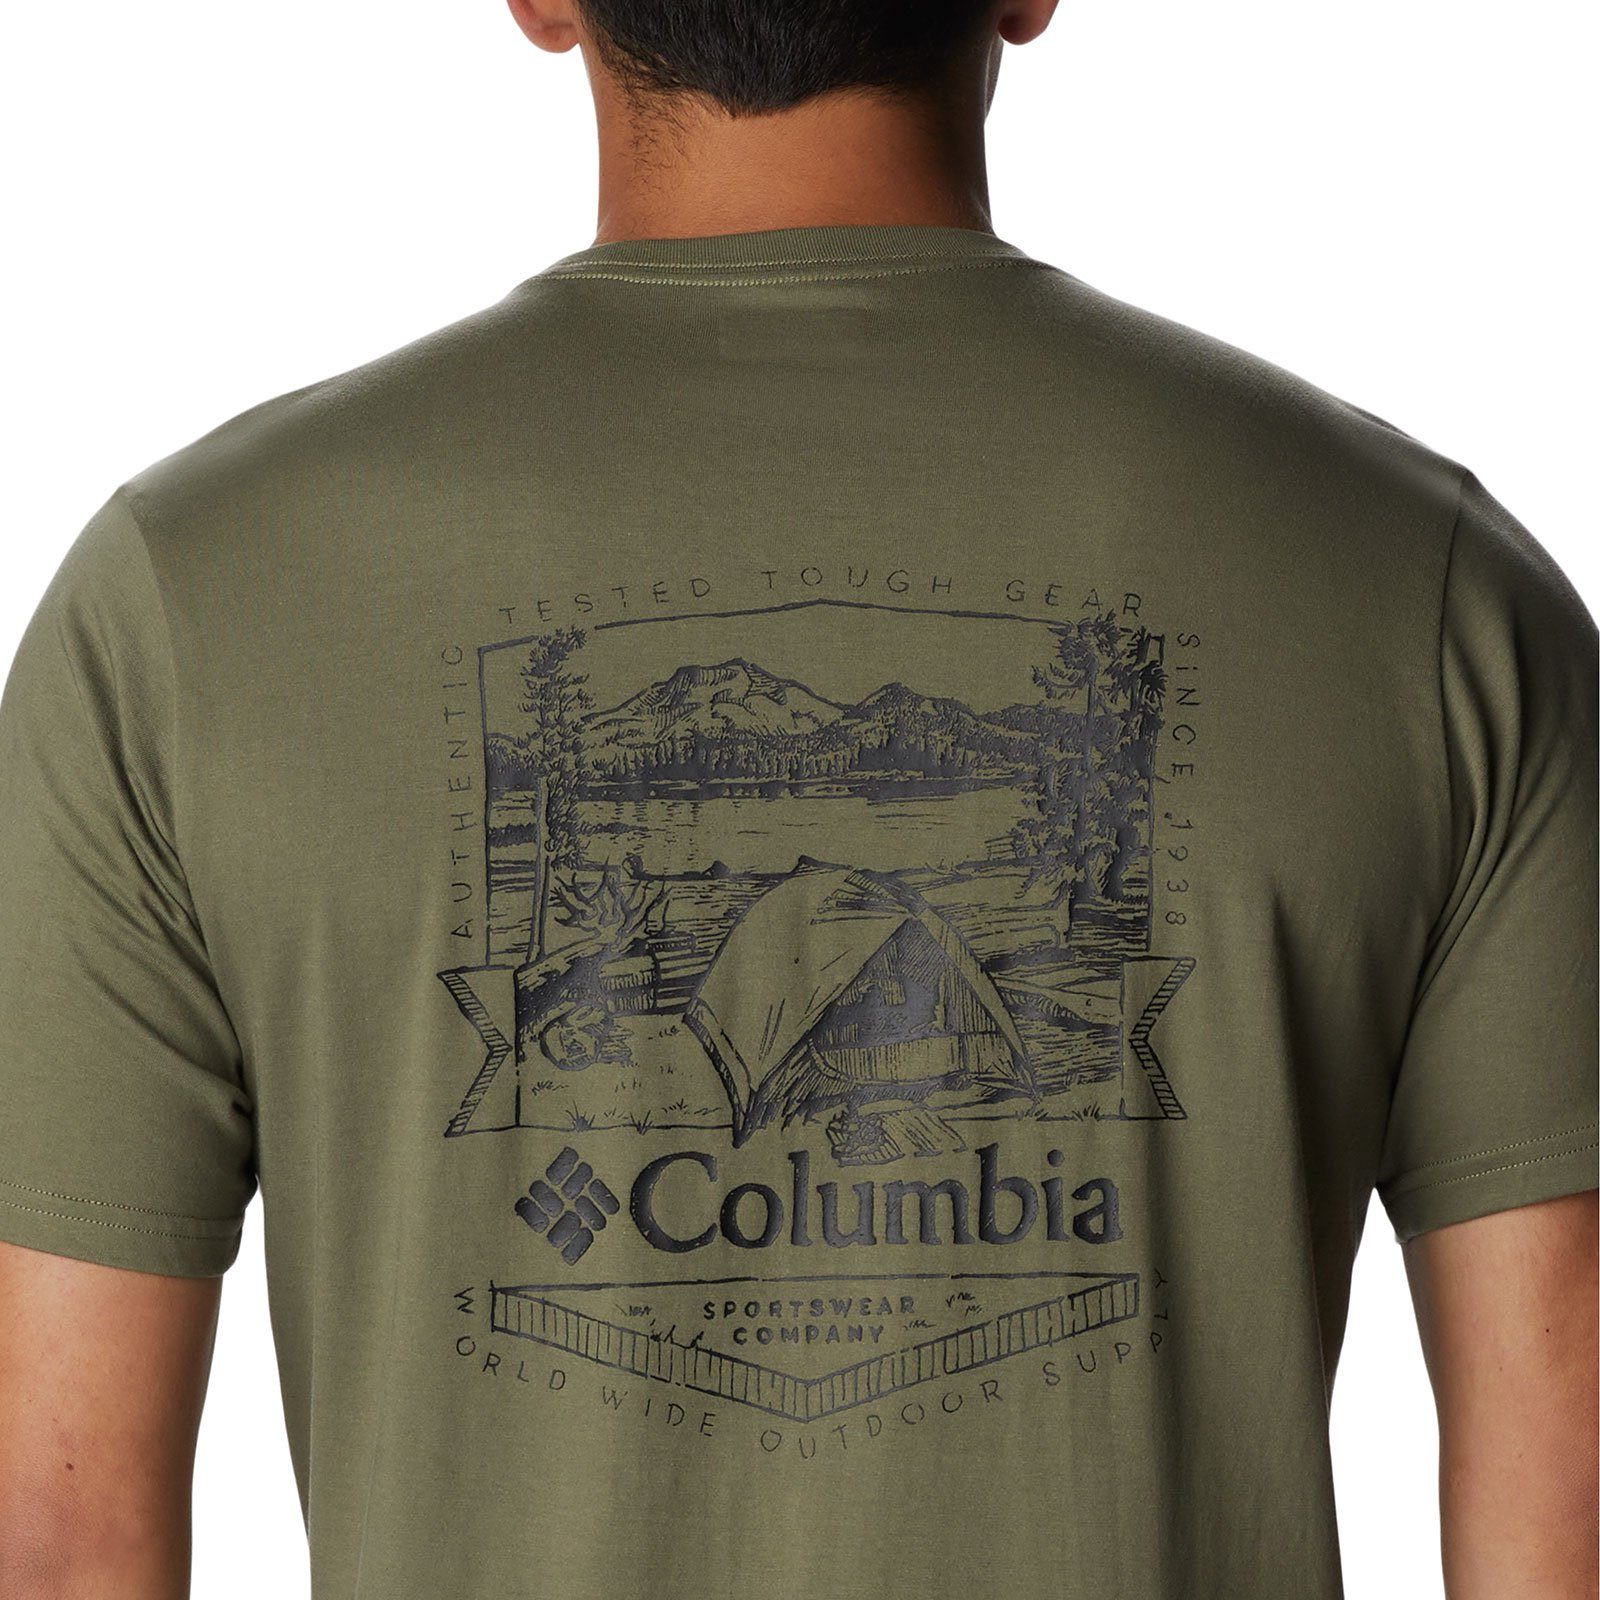 Rundhalsausschnitt River™ stone 397 Graphic Kurzarmshirt Columbia green T-Shirt Back mit Rockaway